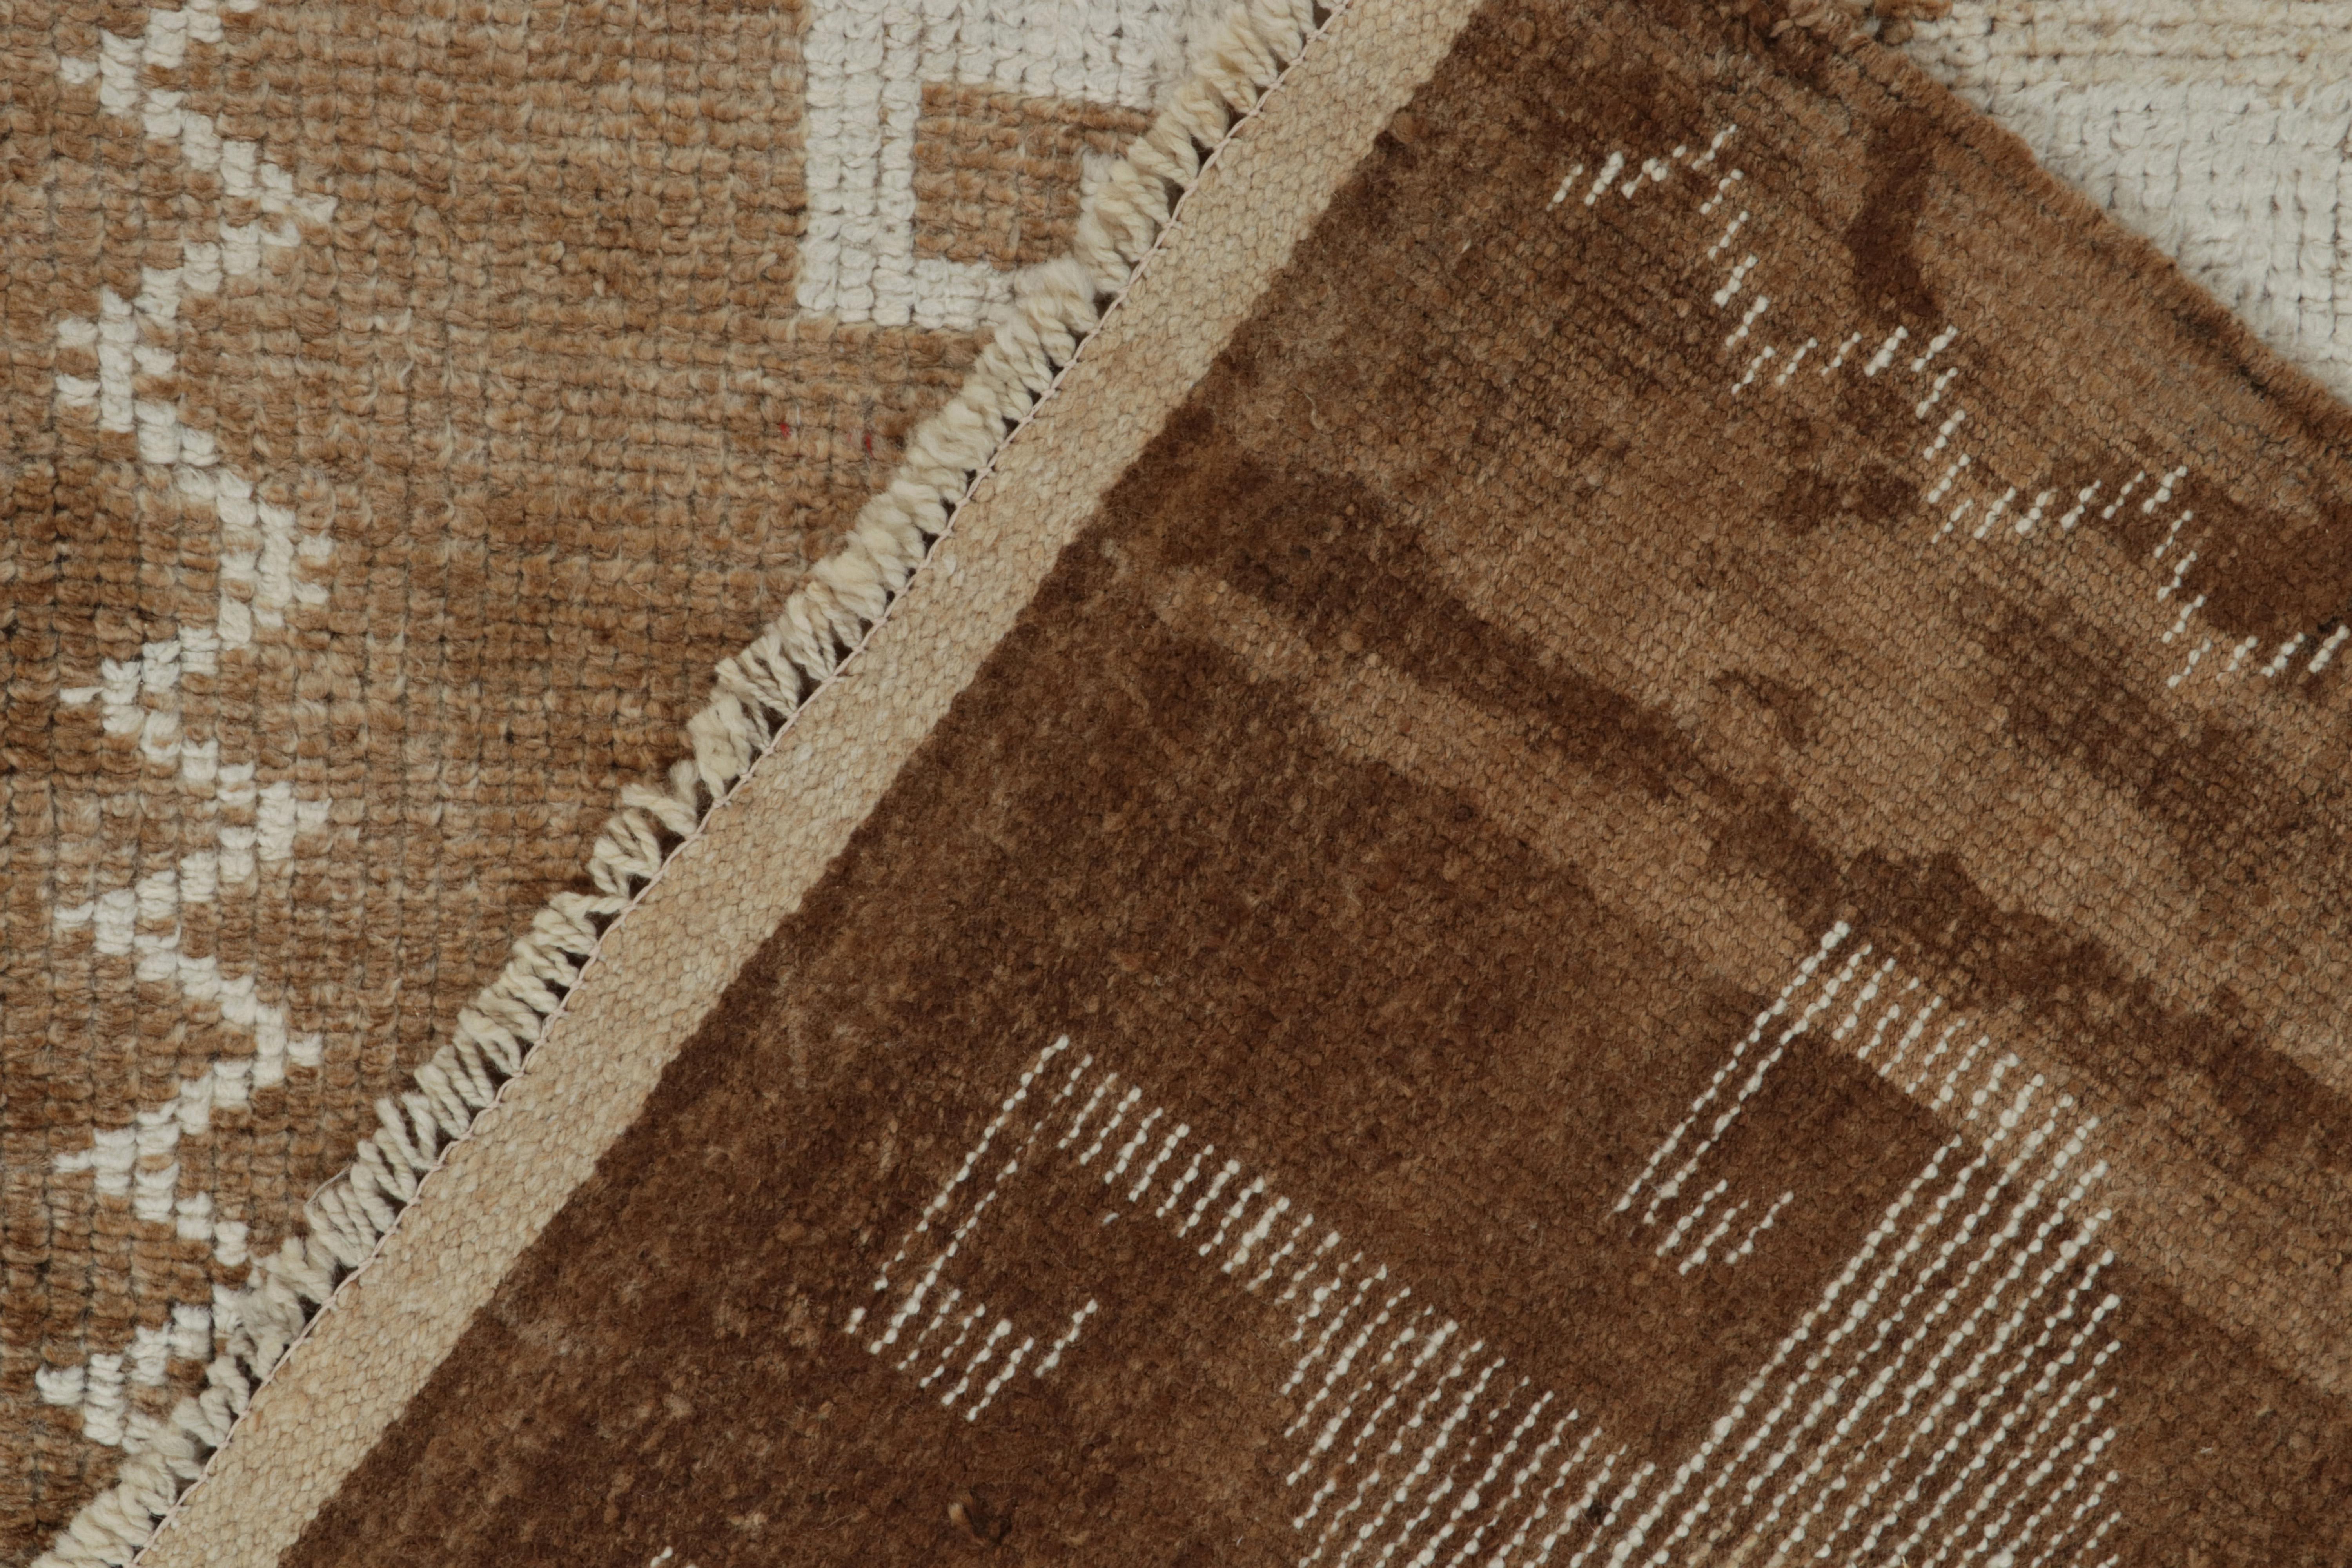 Wool Vintage Tribal Runner in Beige-Brown and White Geometric Patterns by Rug & Kilim For Sale